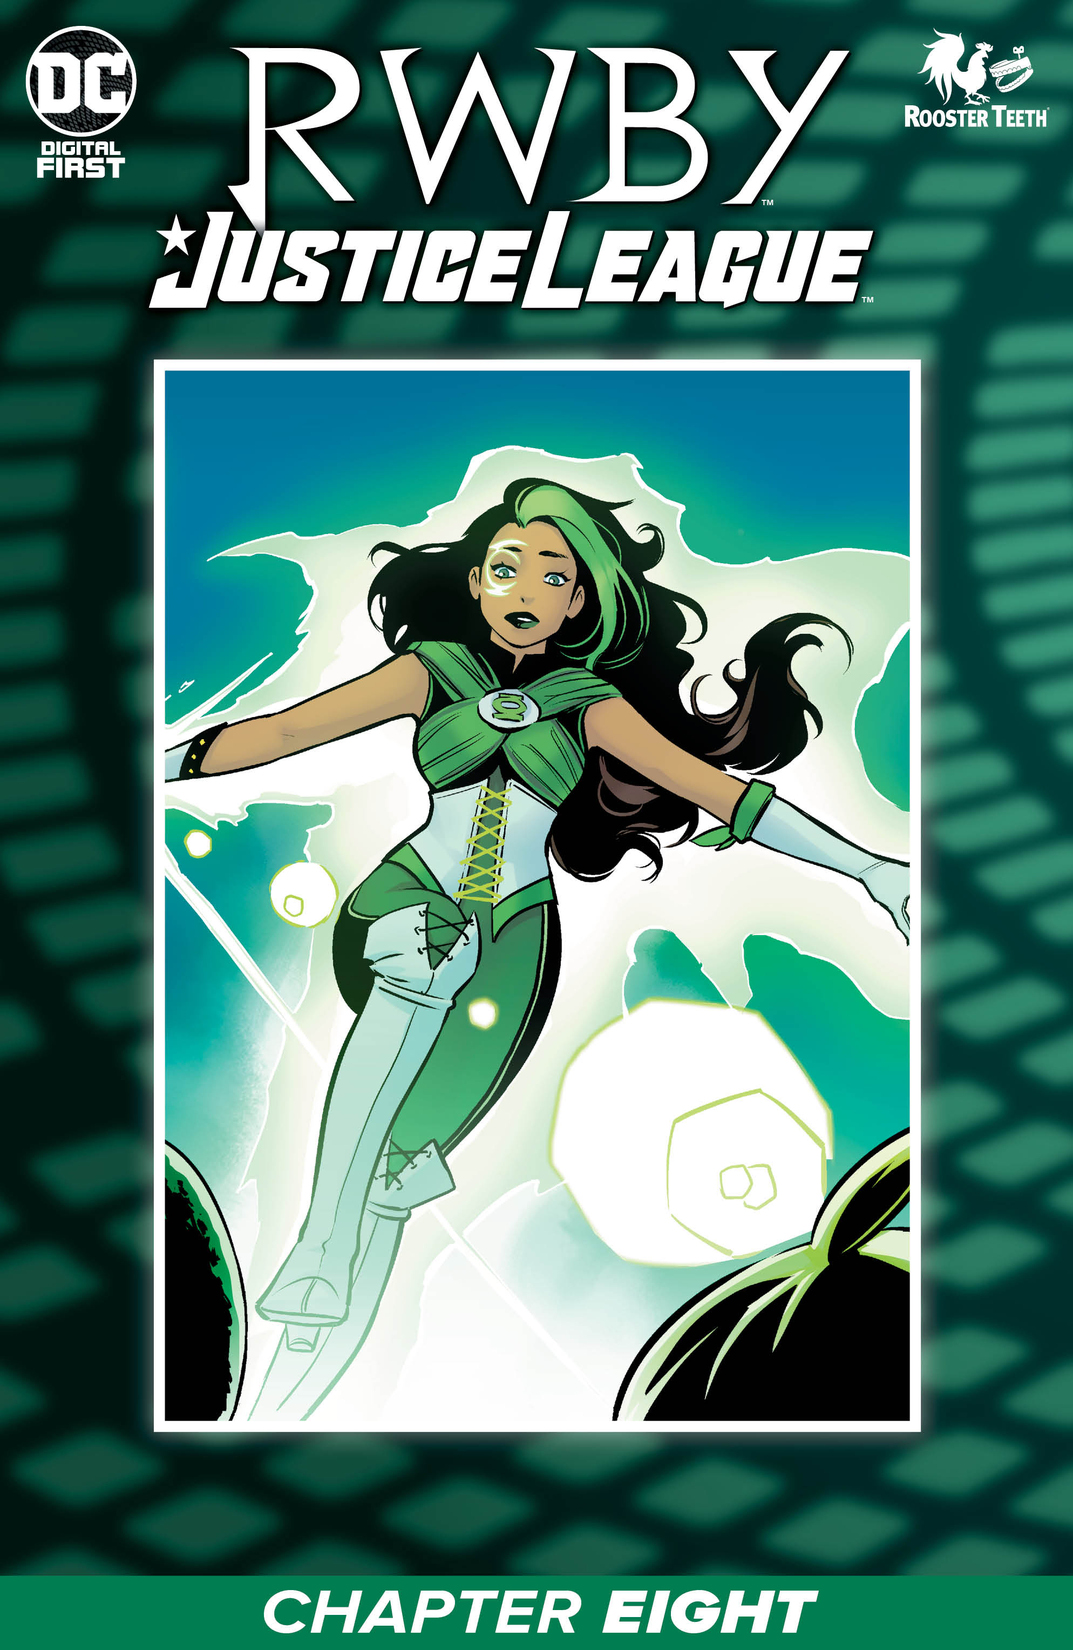 RWBY/Justice League #8 preview images